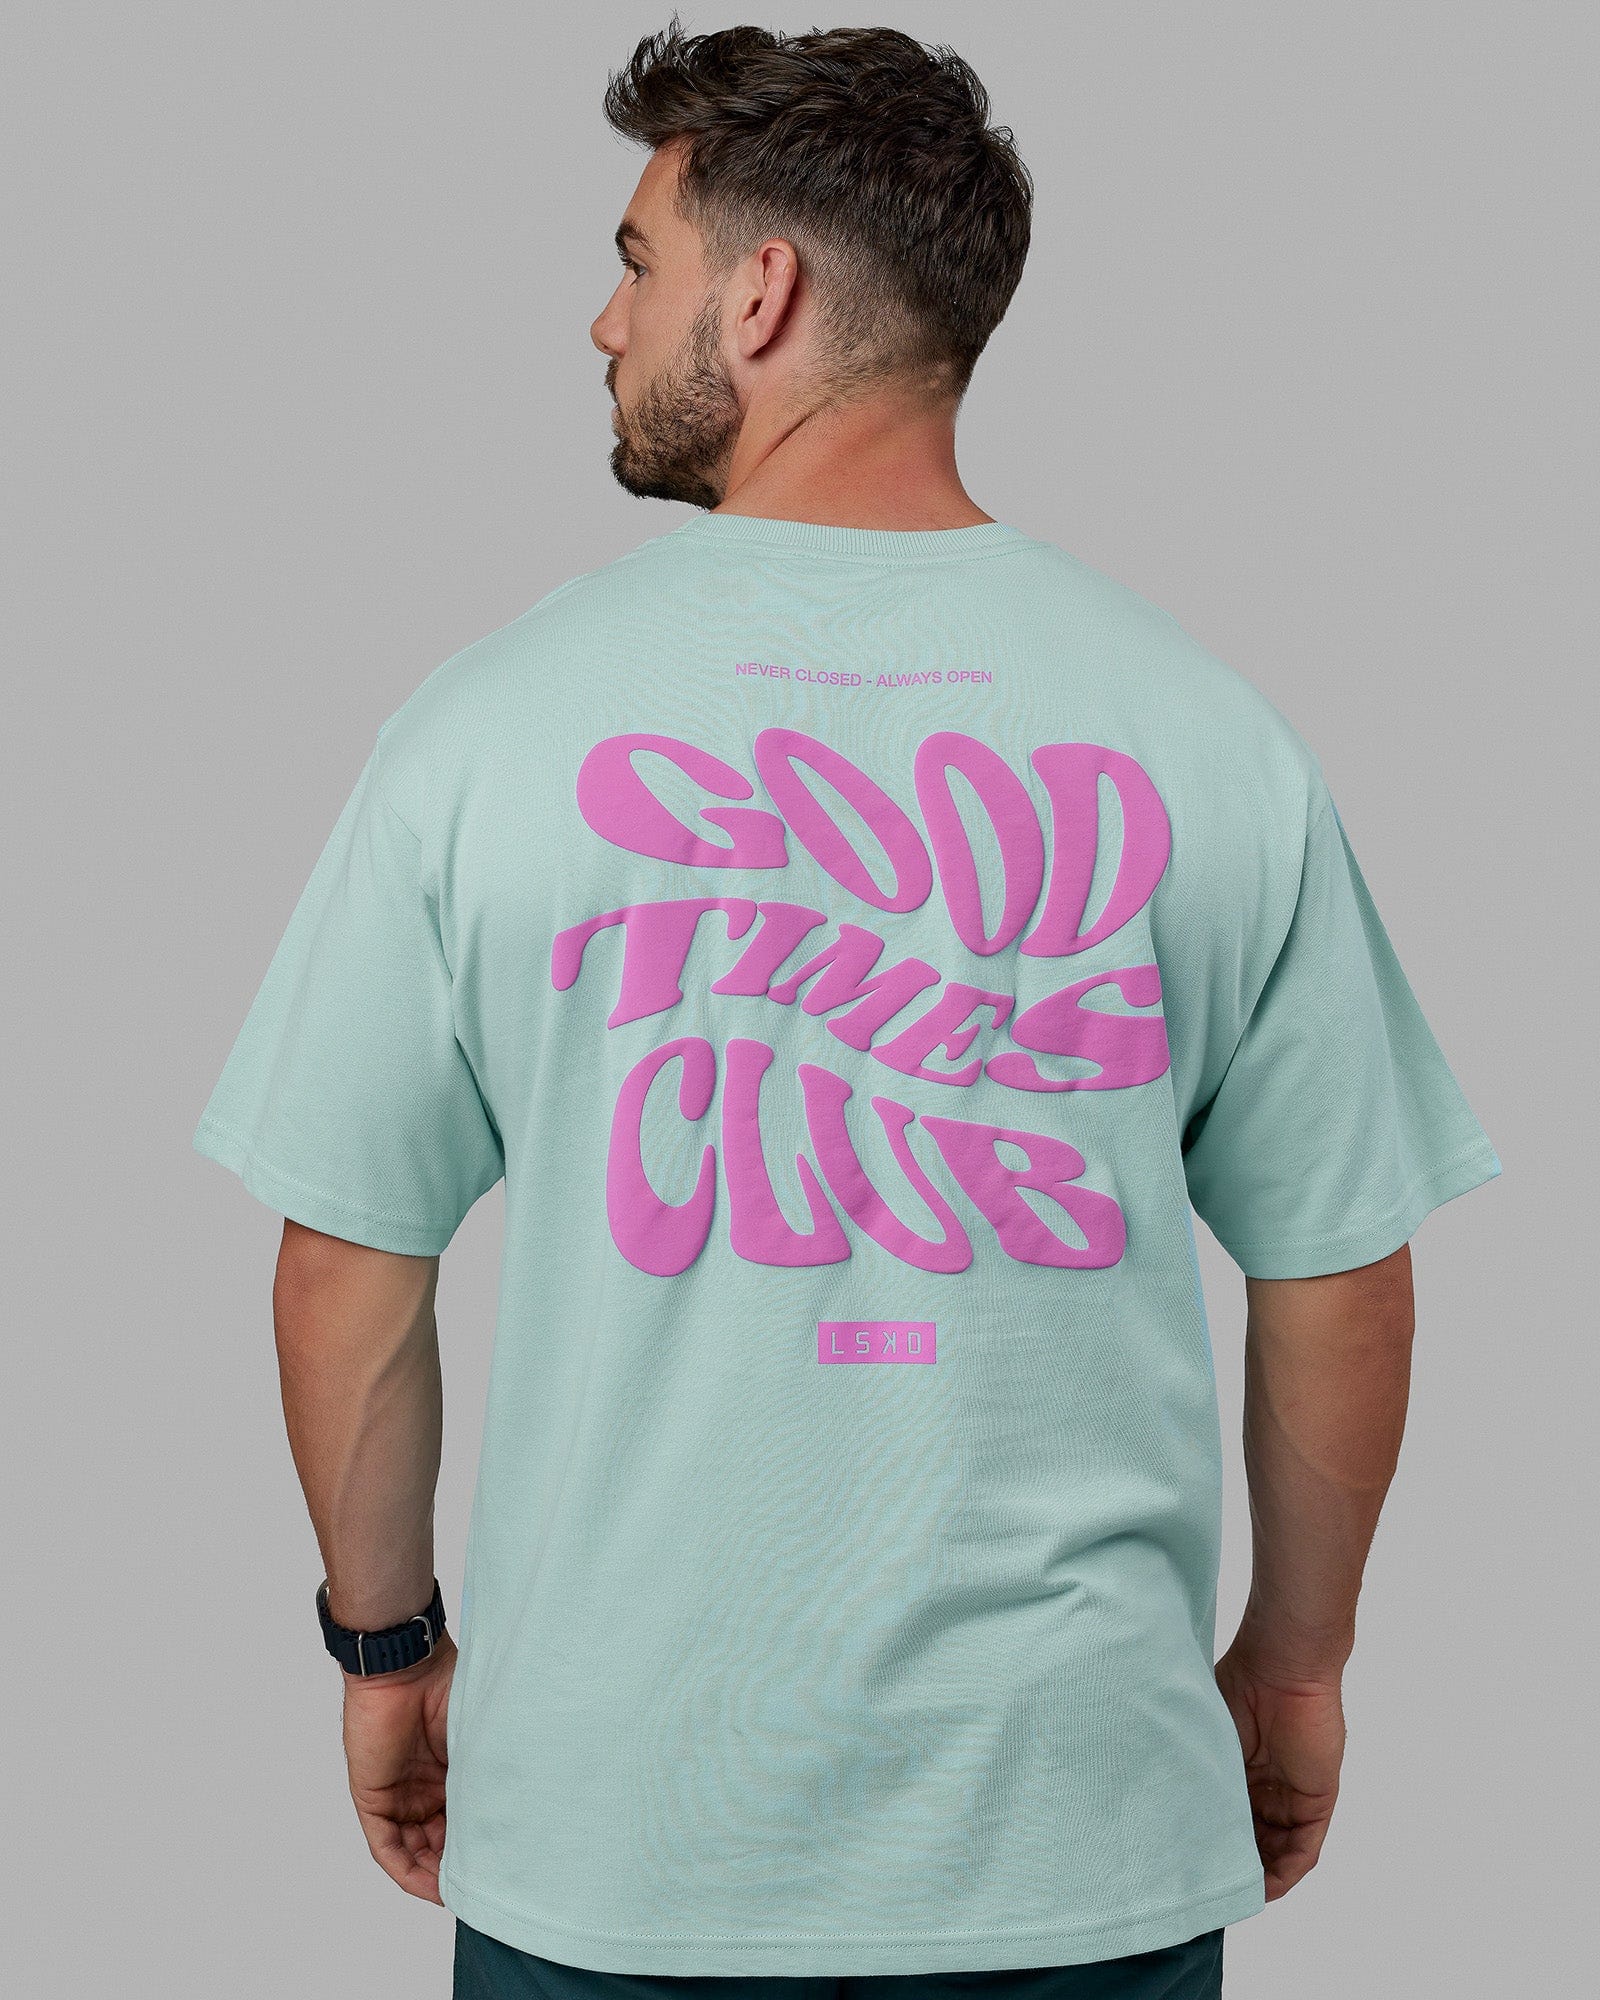 Unisex Good Times Heavyweight Tee - Pastel Turquoise-Spark Pink | LSKD